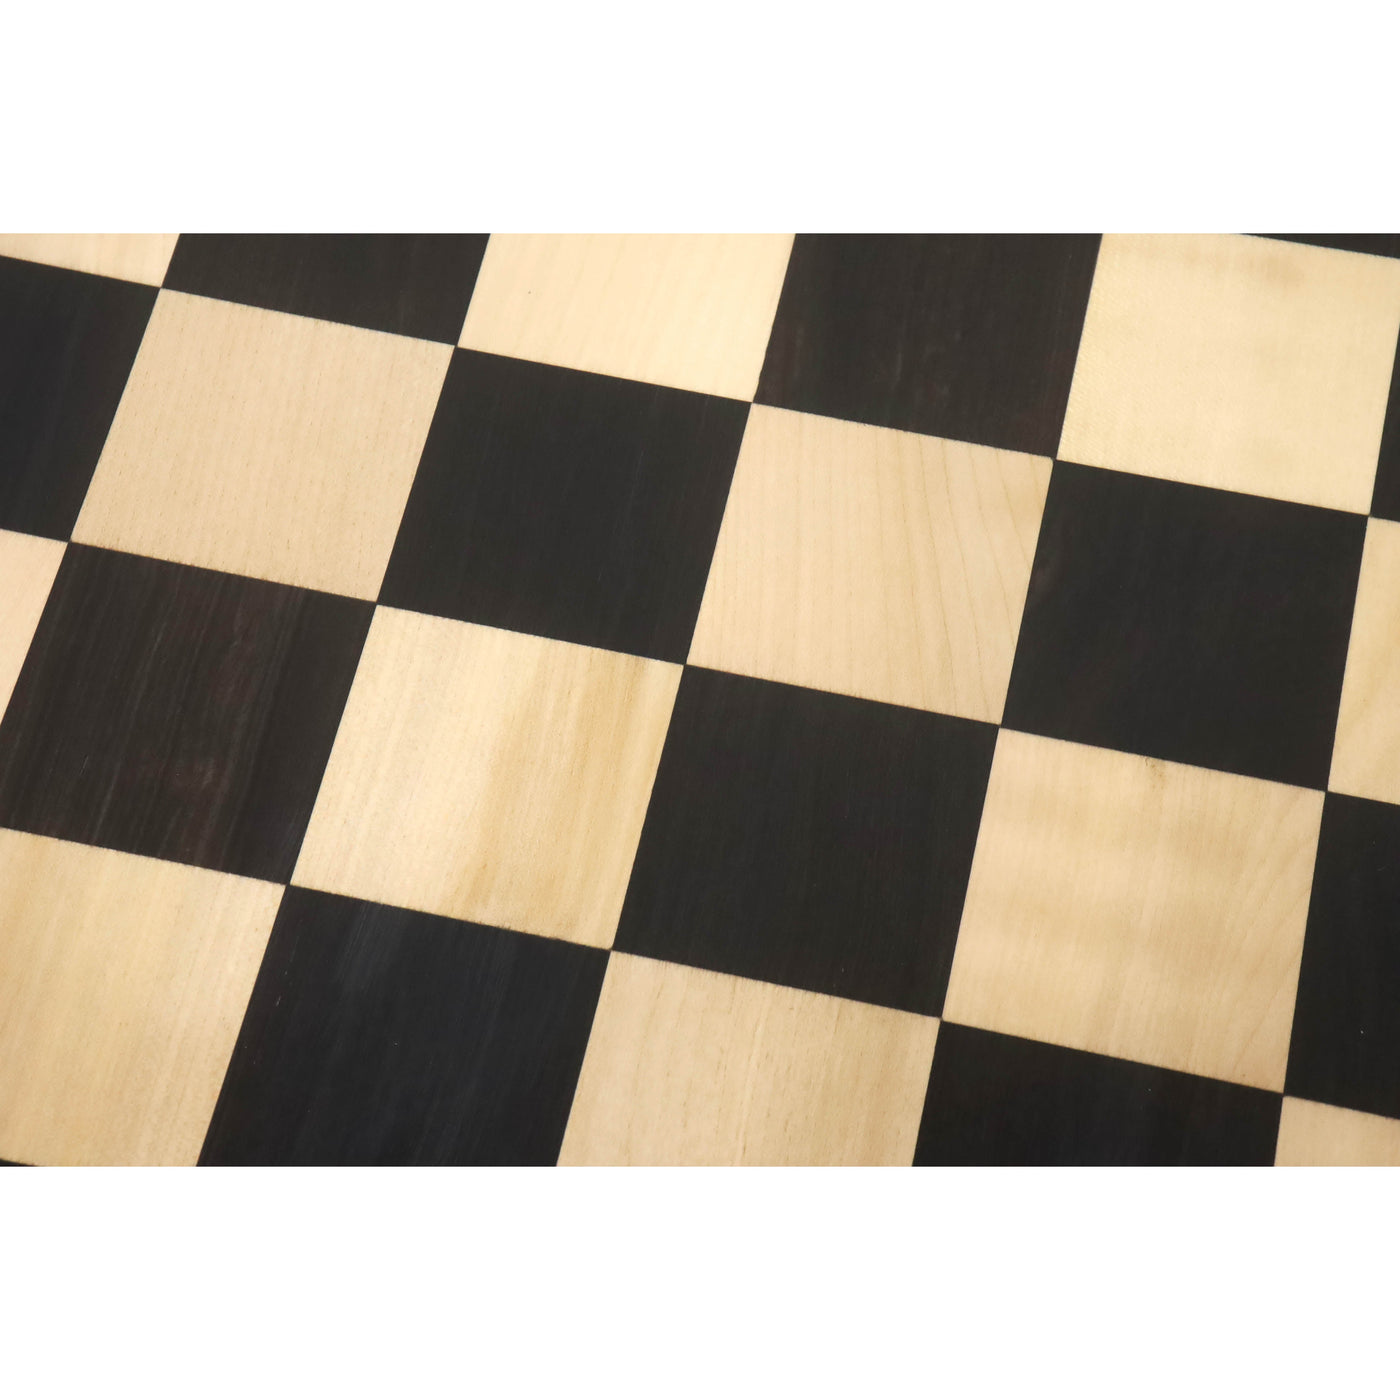 4" Sleek Staunton Luxury Ebony Wood Chess Pieces with 21" Ebony & Maple Wood - Matt Finished Chess board and Golden Rosewood Chess Pieces Storage Box